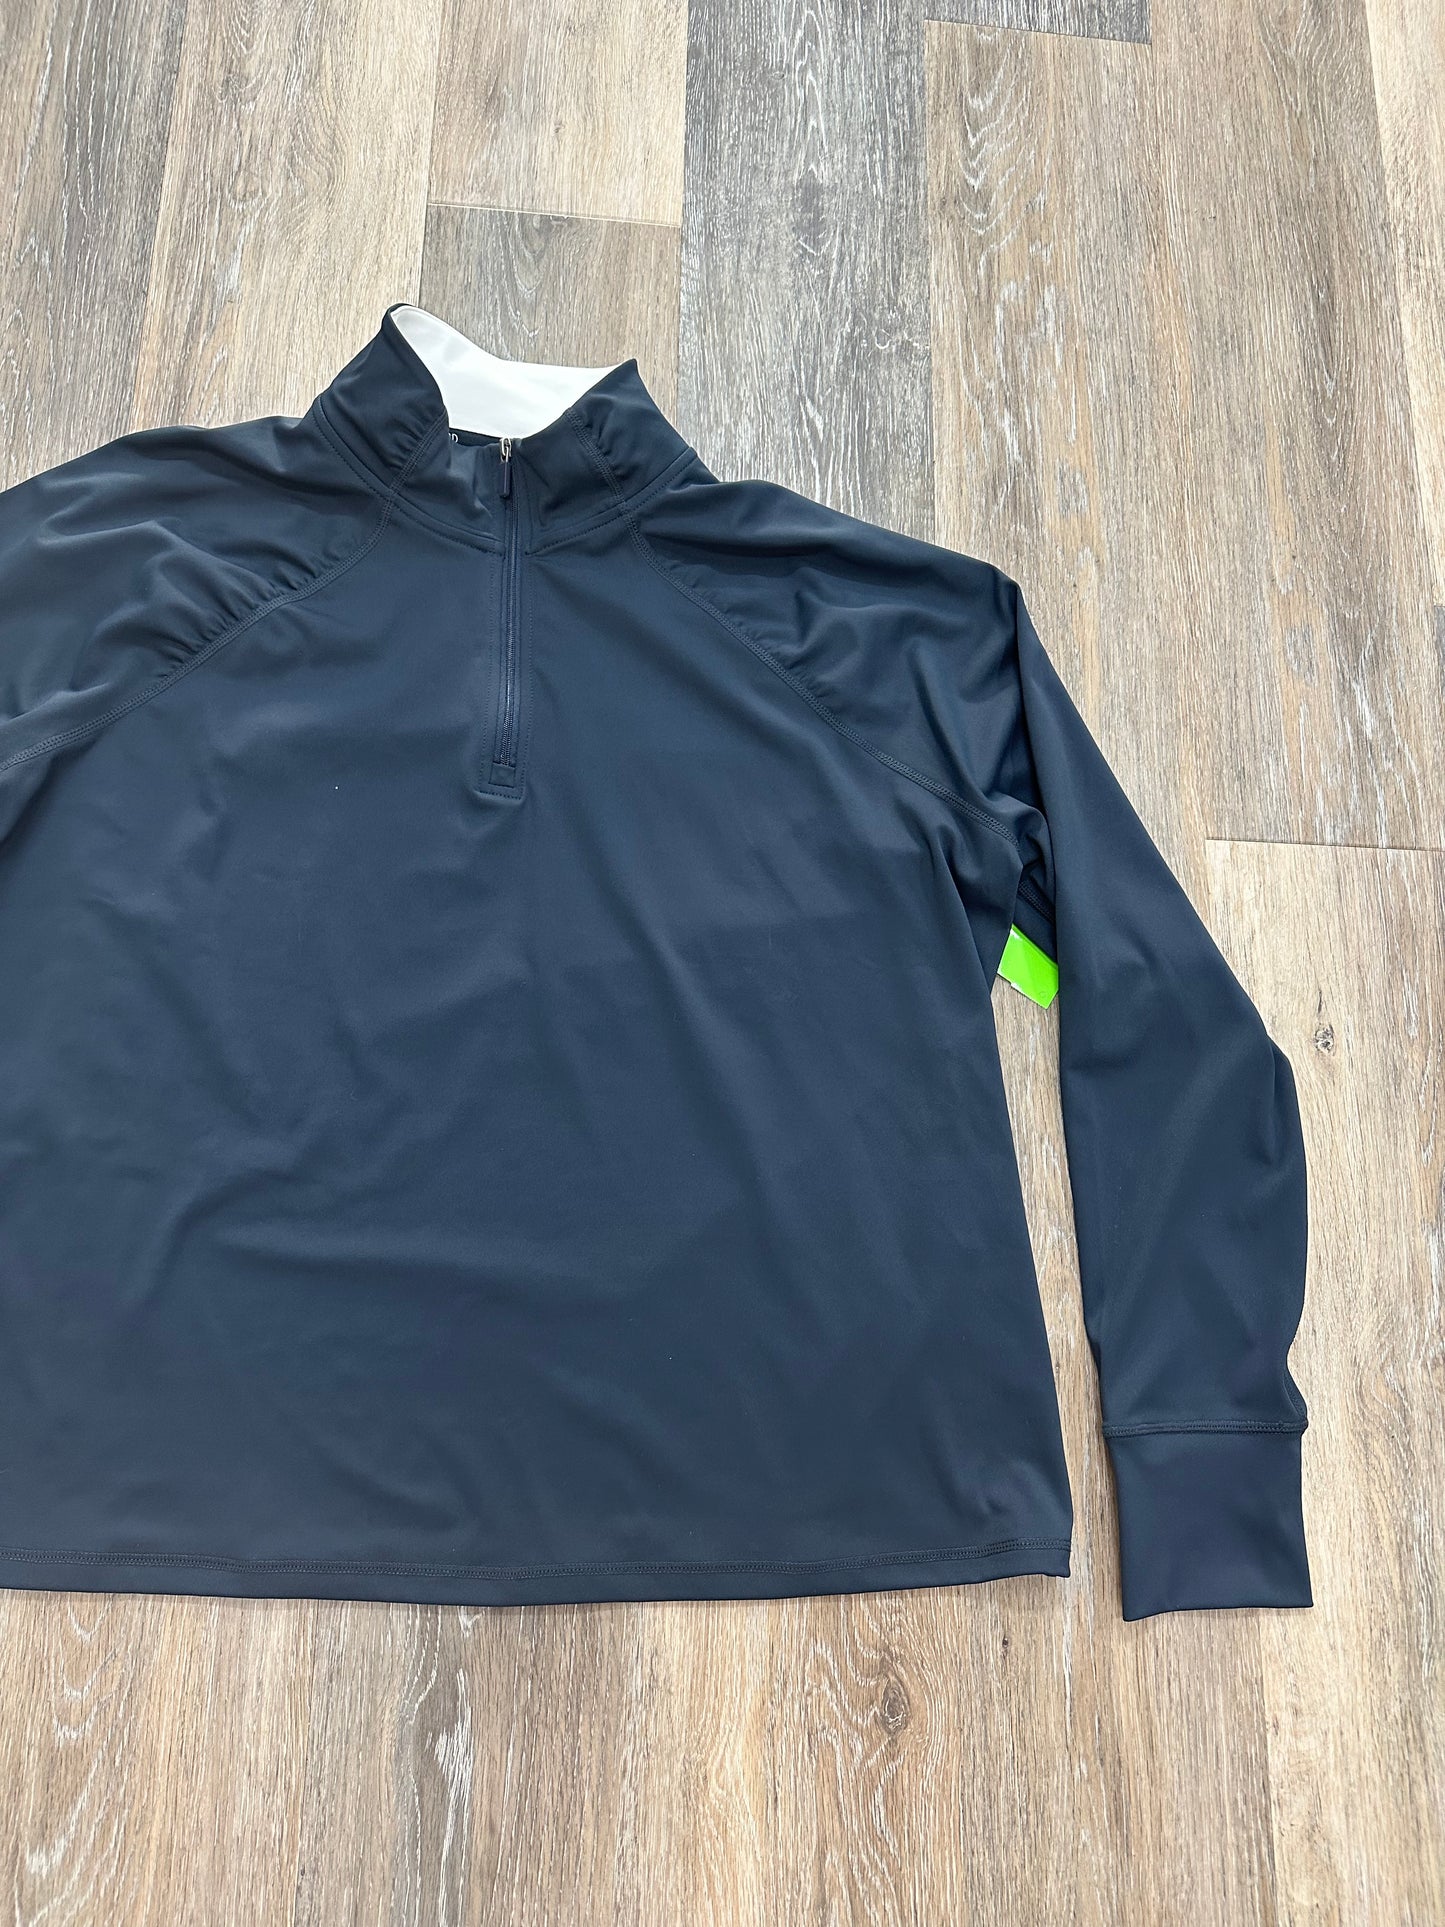 Athletic Sweatshirt Crewneck By Daily Threads  Size: 2x